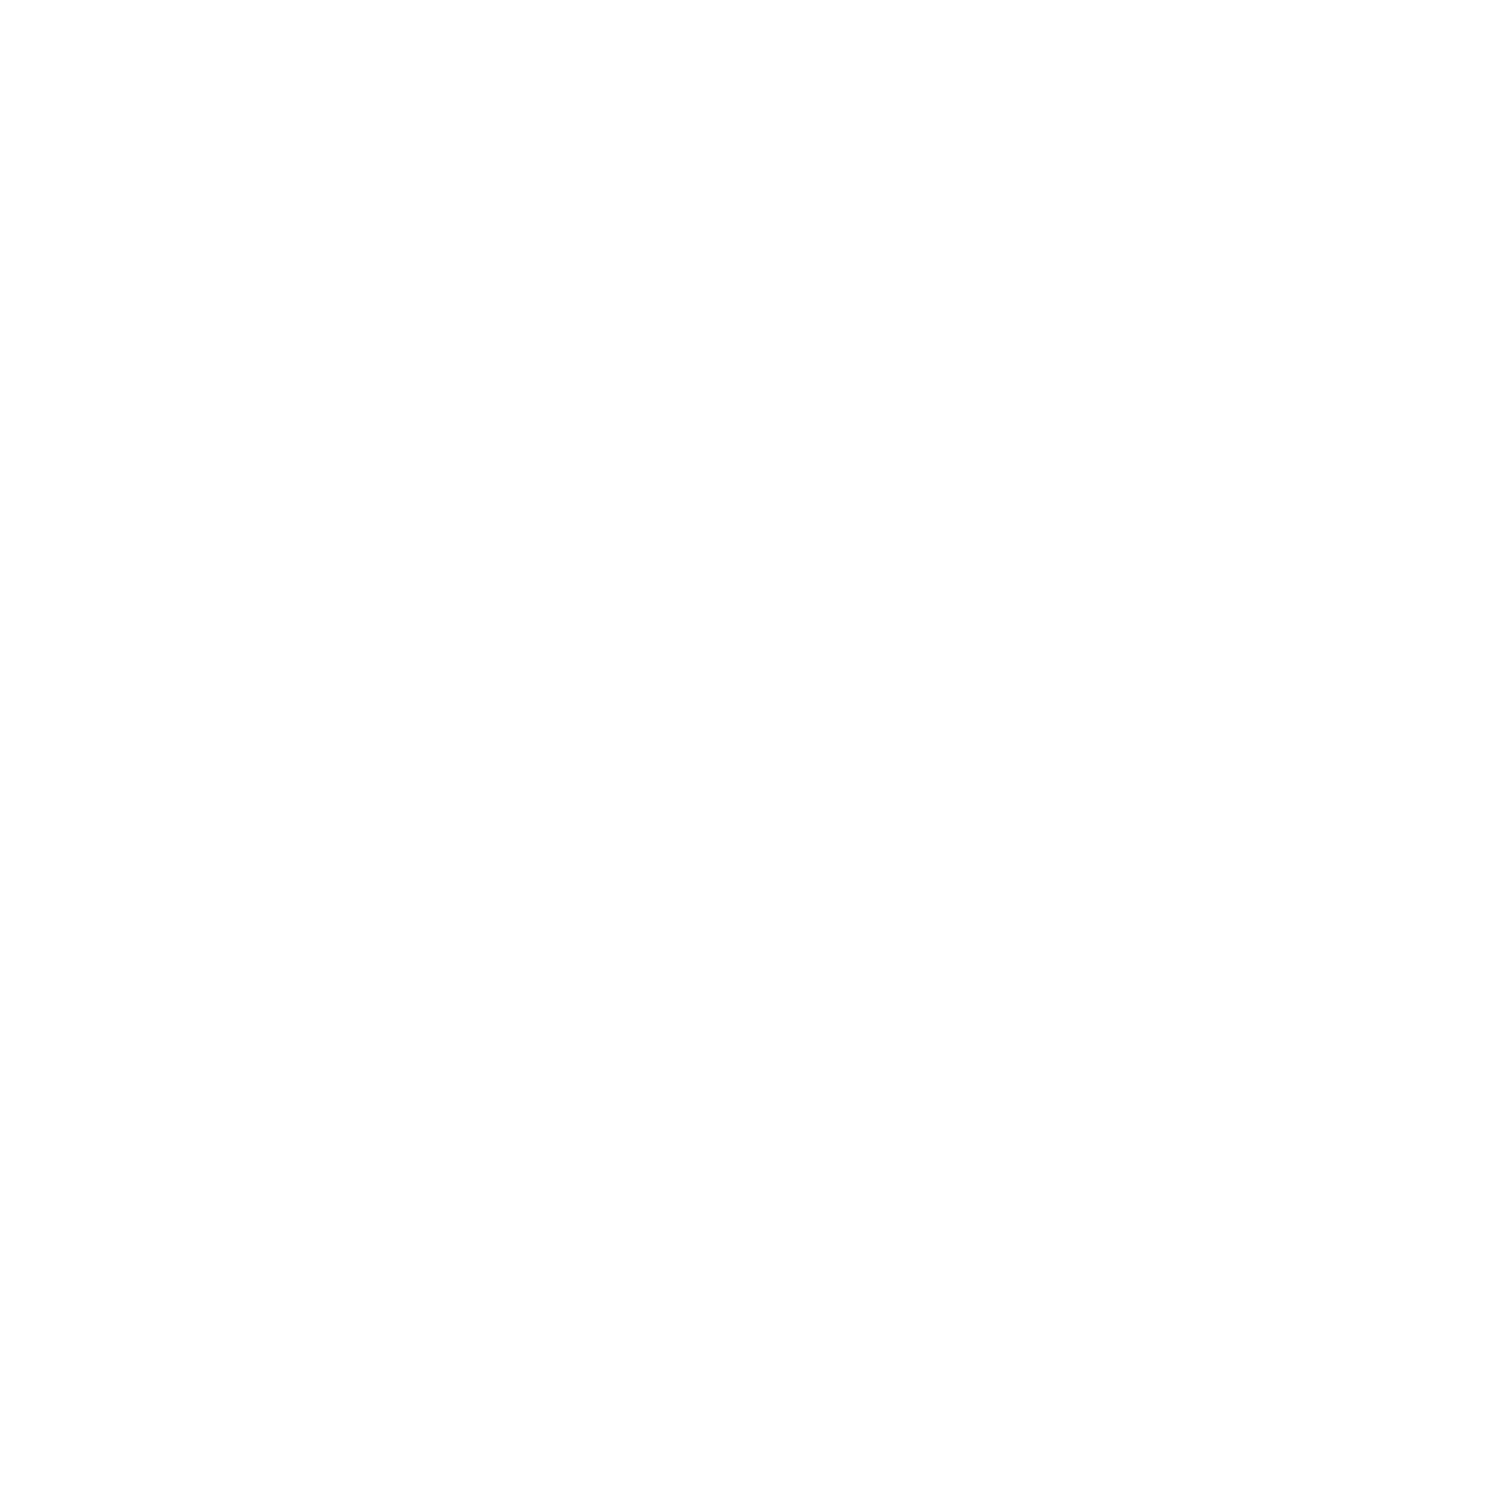 Club Hotel Namba